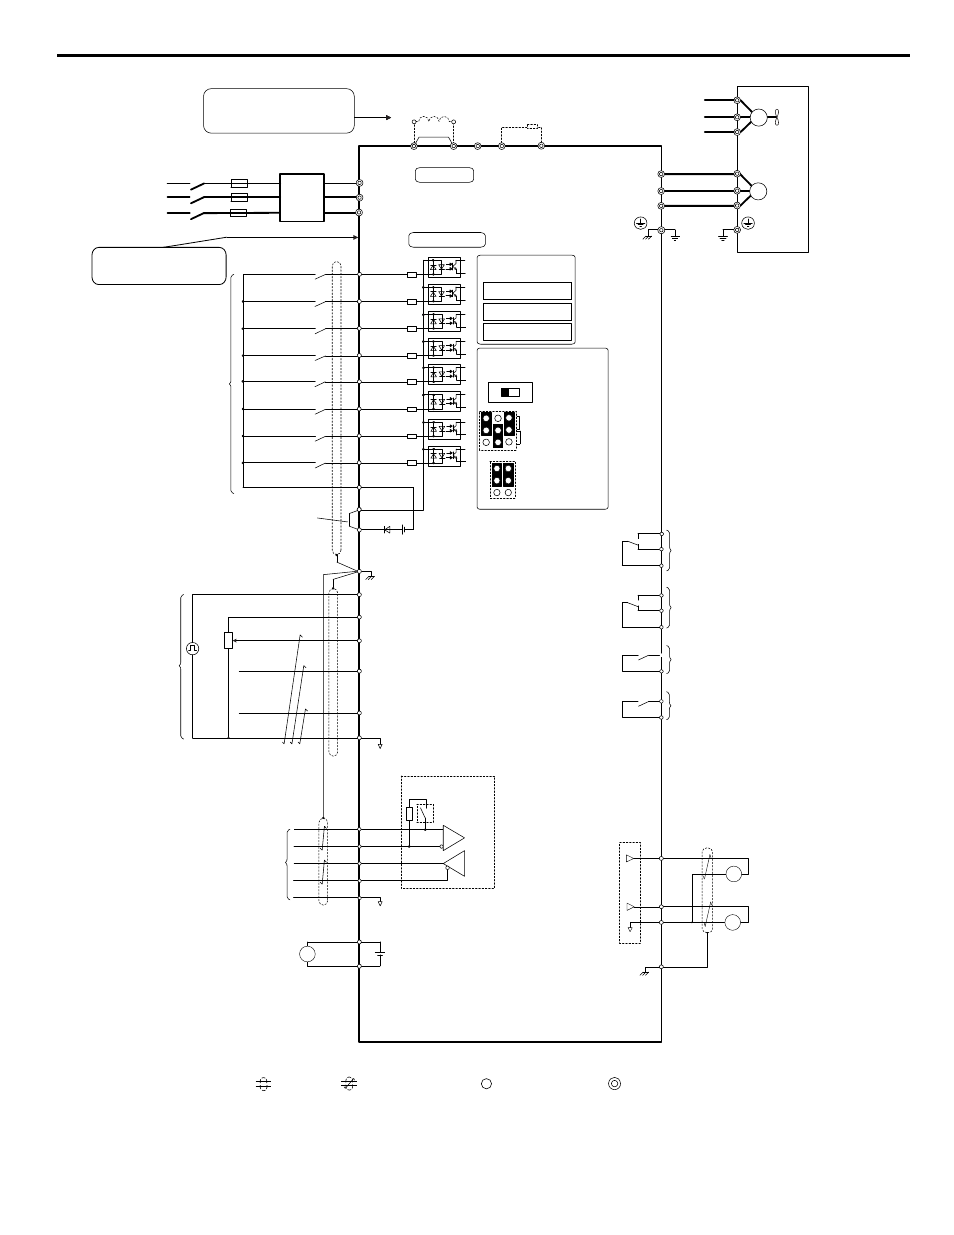 Yaskawa Wiring Diagram : Yaskawa Analog Monitor Machmotion / Yaskawa v1000 wiring diagram